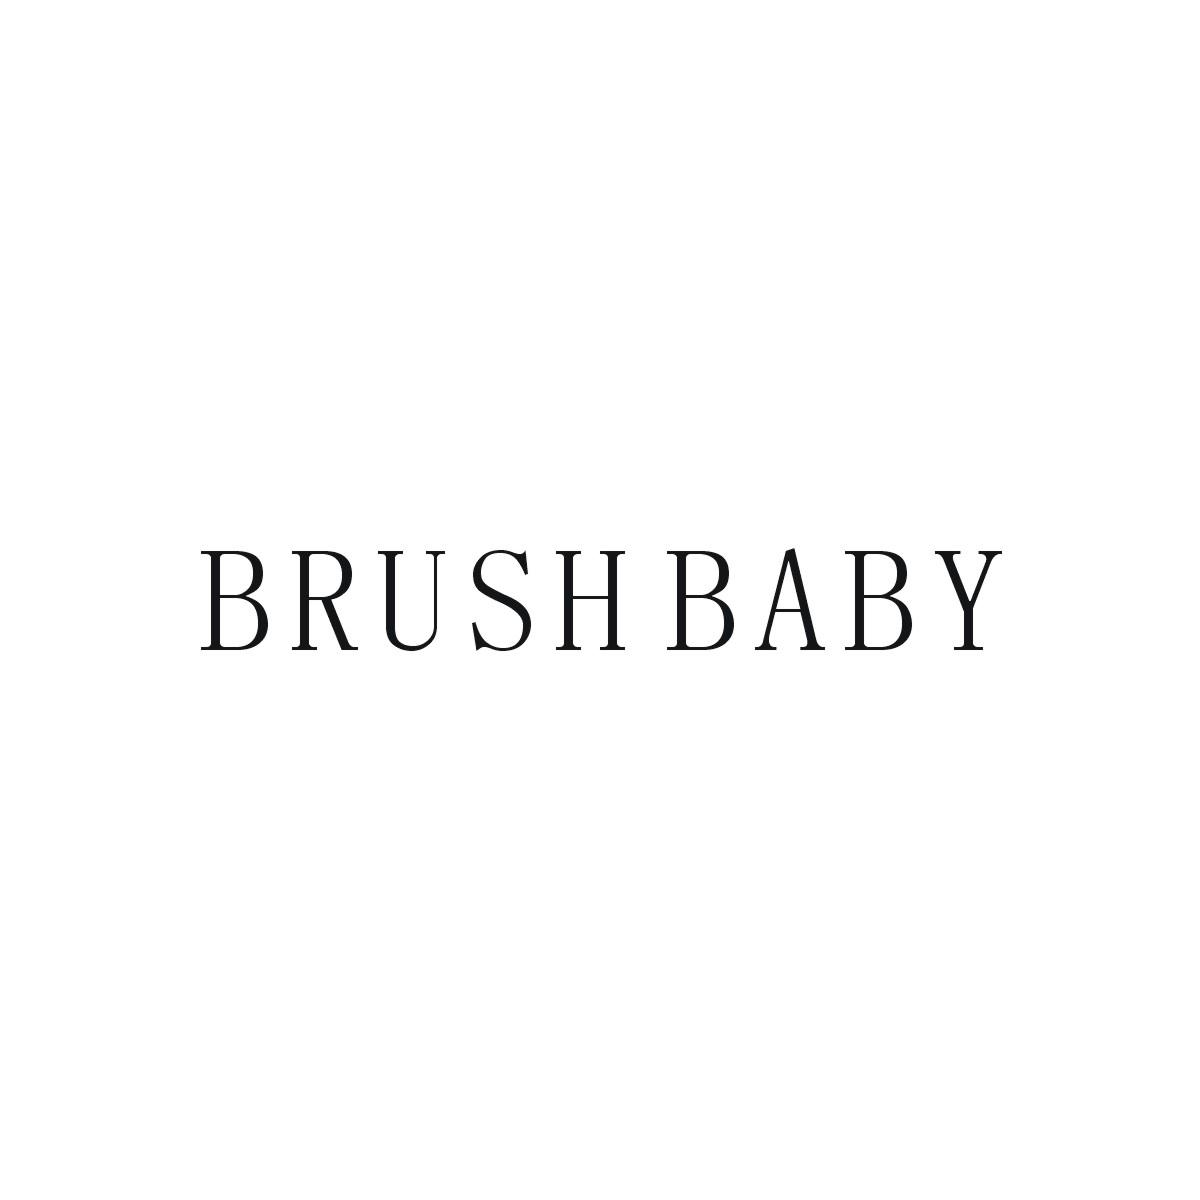 BRUSH BABY暖水瓶商标转让费用买卖交易流程